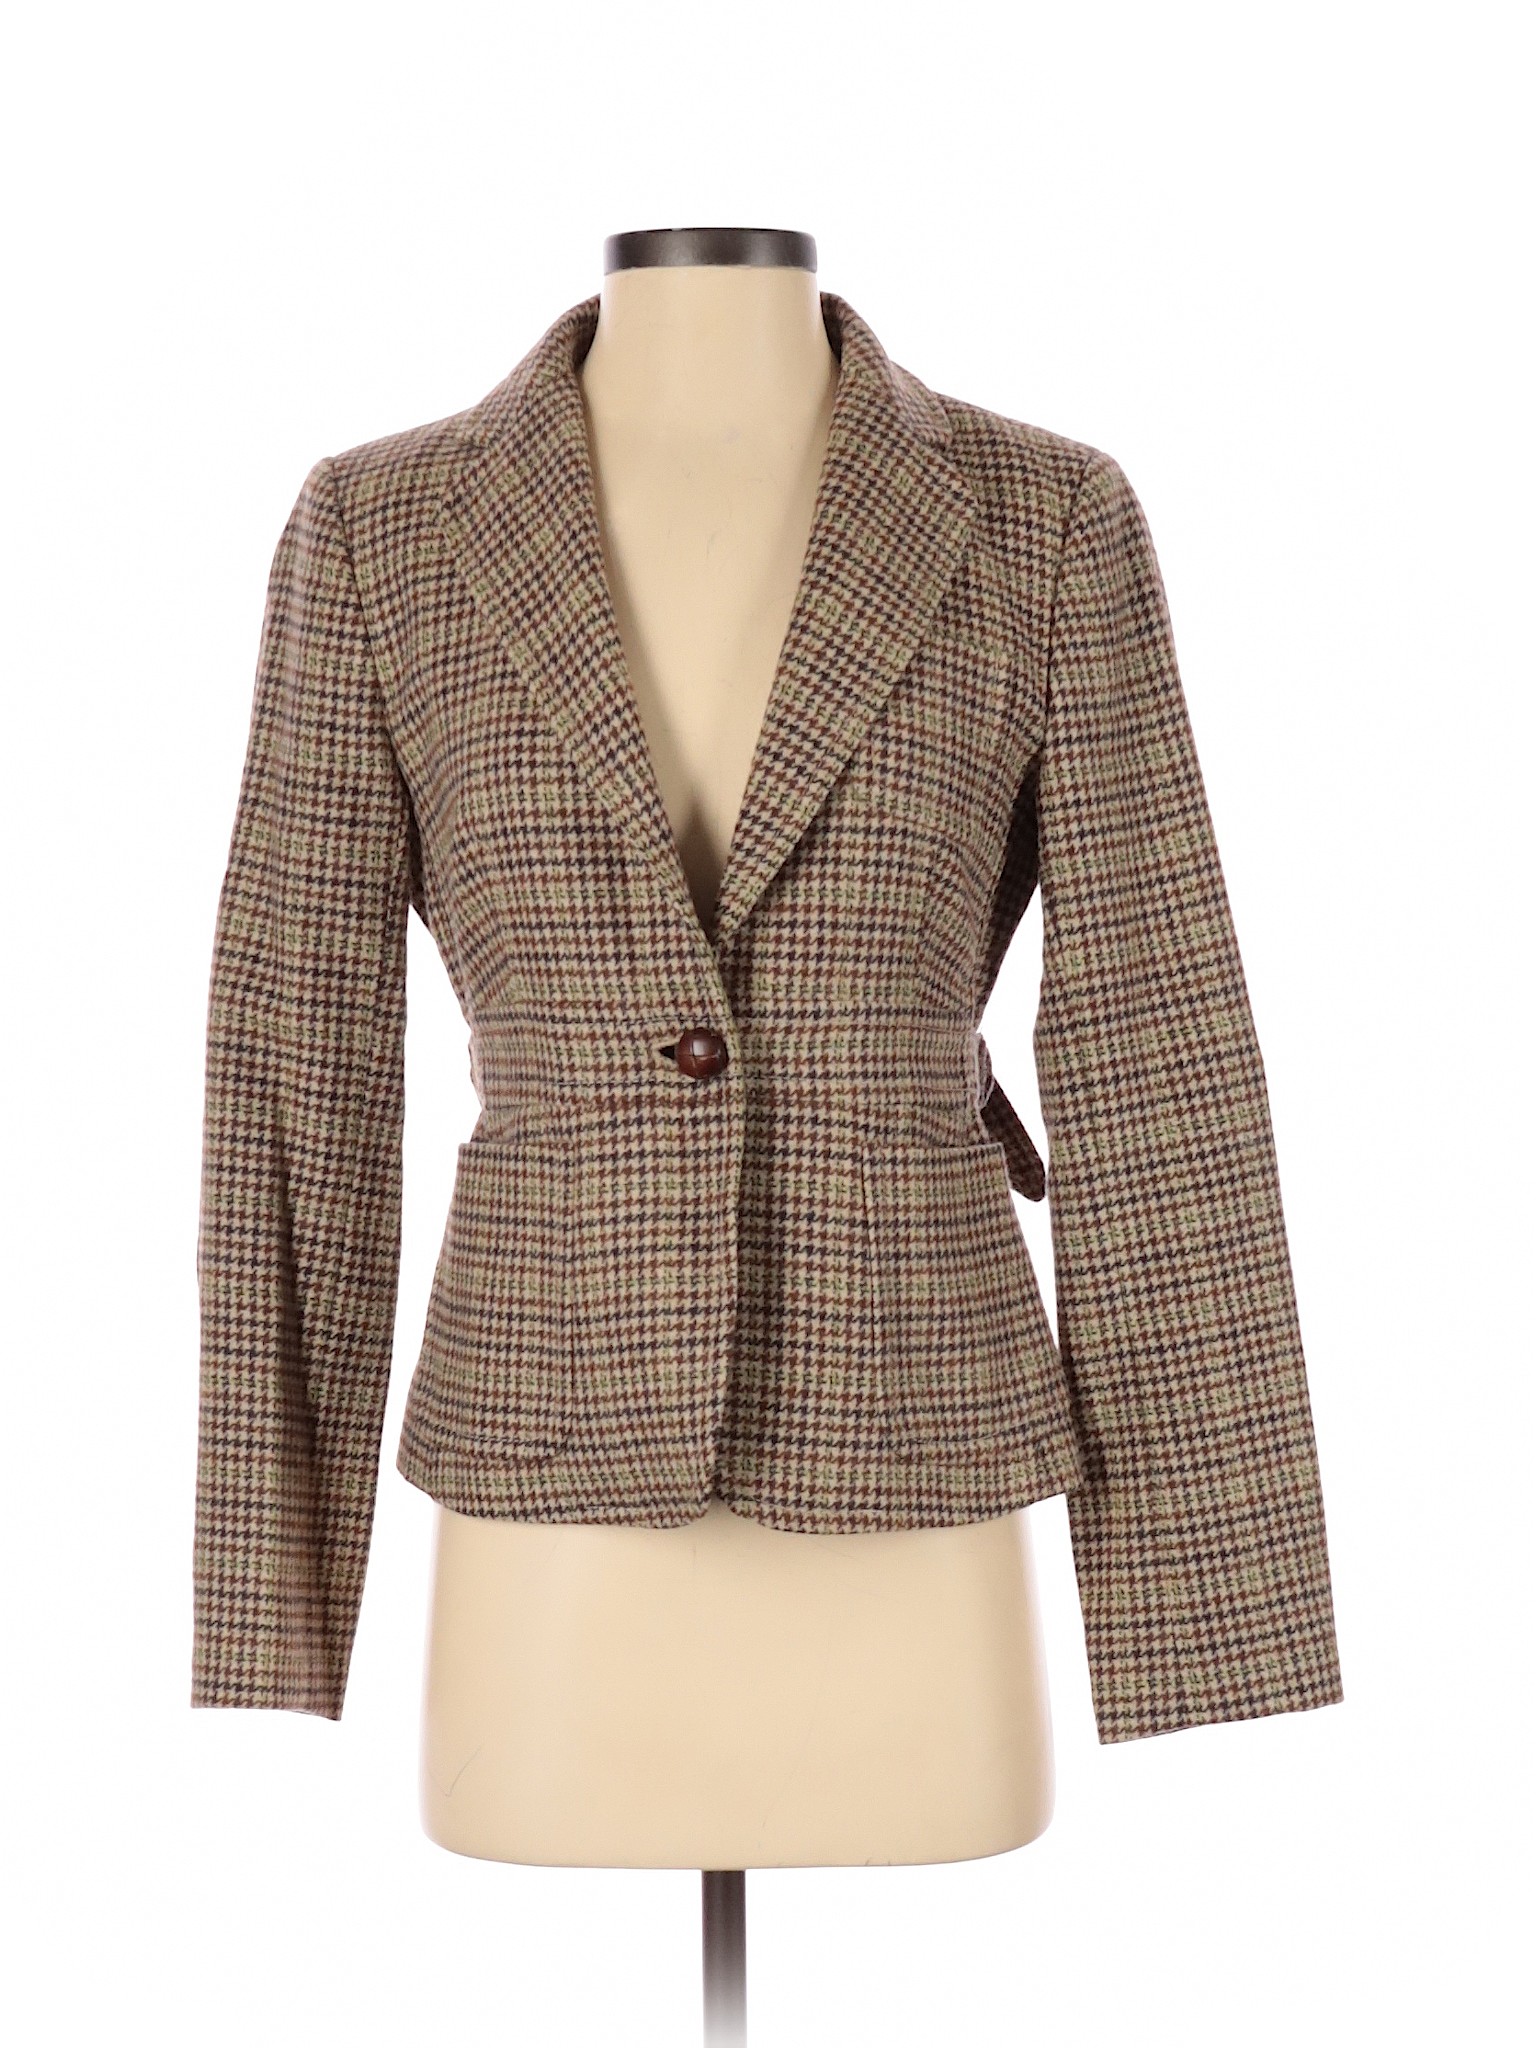 J.Crew Women Brown Wool Blazer 4 | eBay